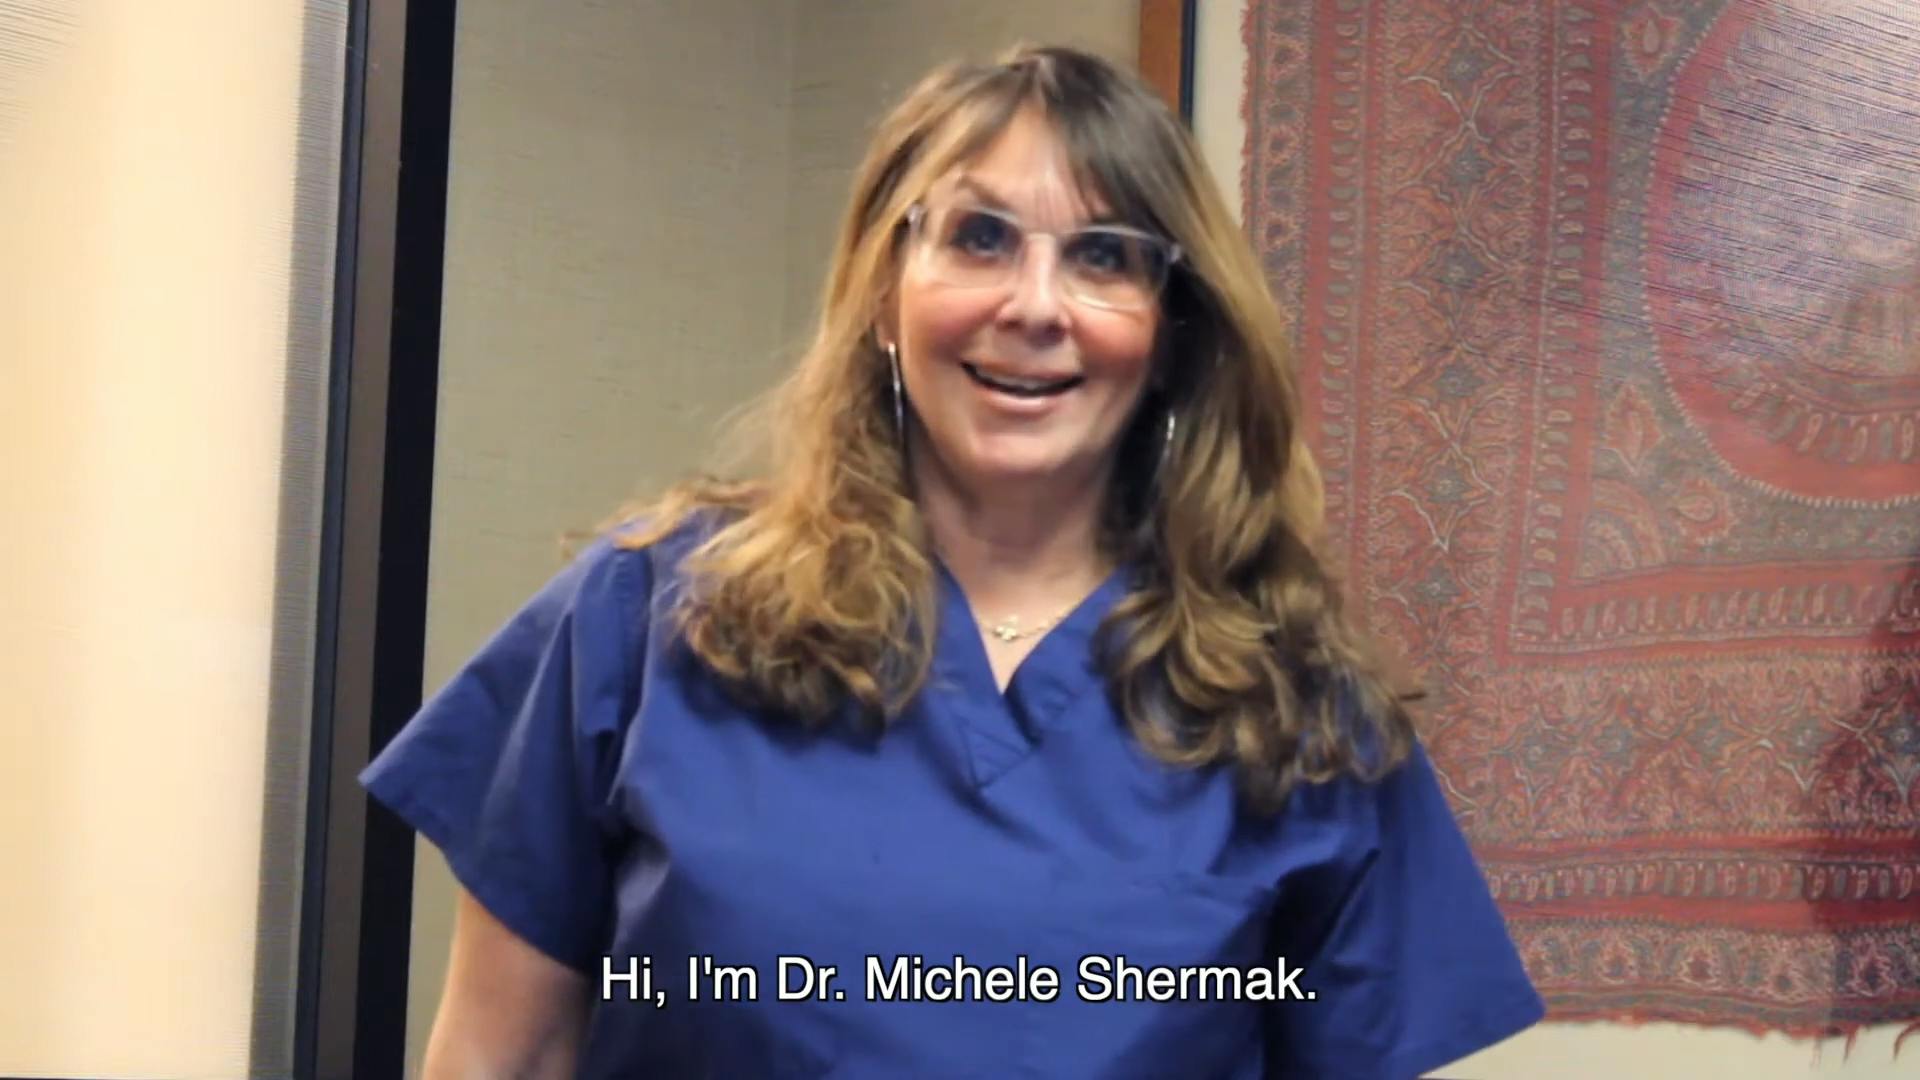 Dr. Michele Shermak